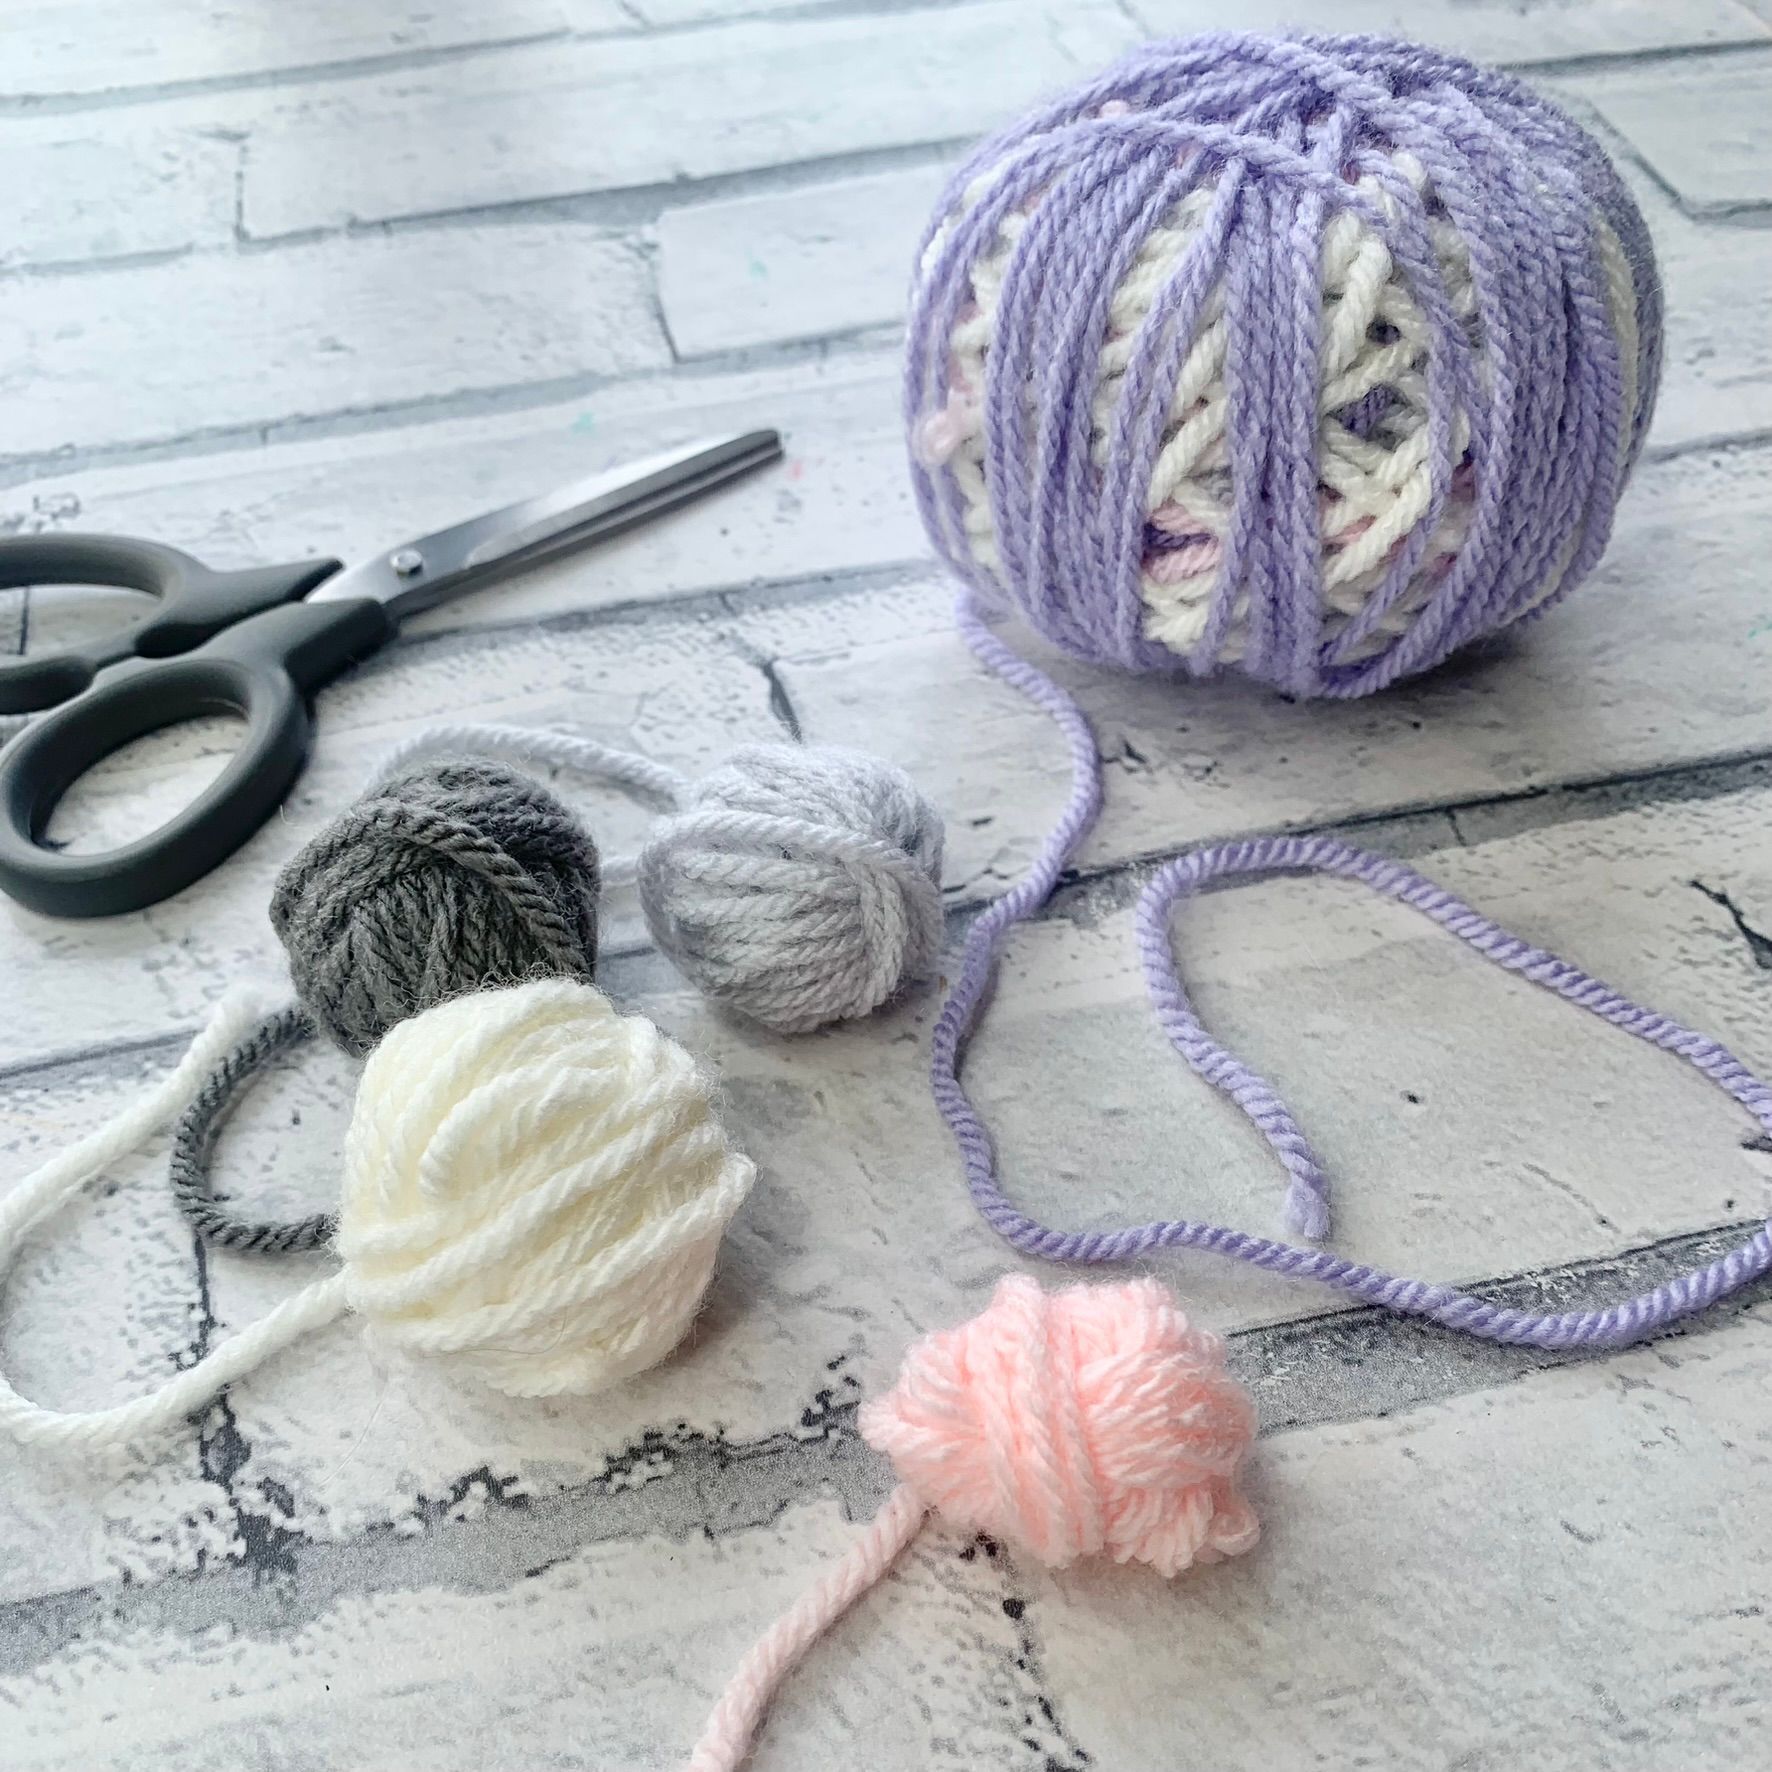 How to make a magic yarn ball